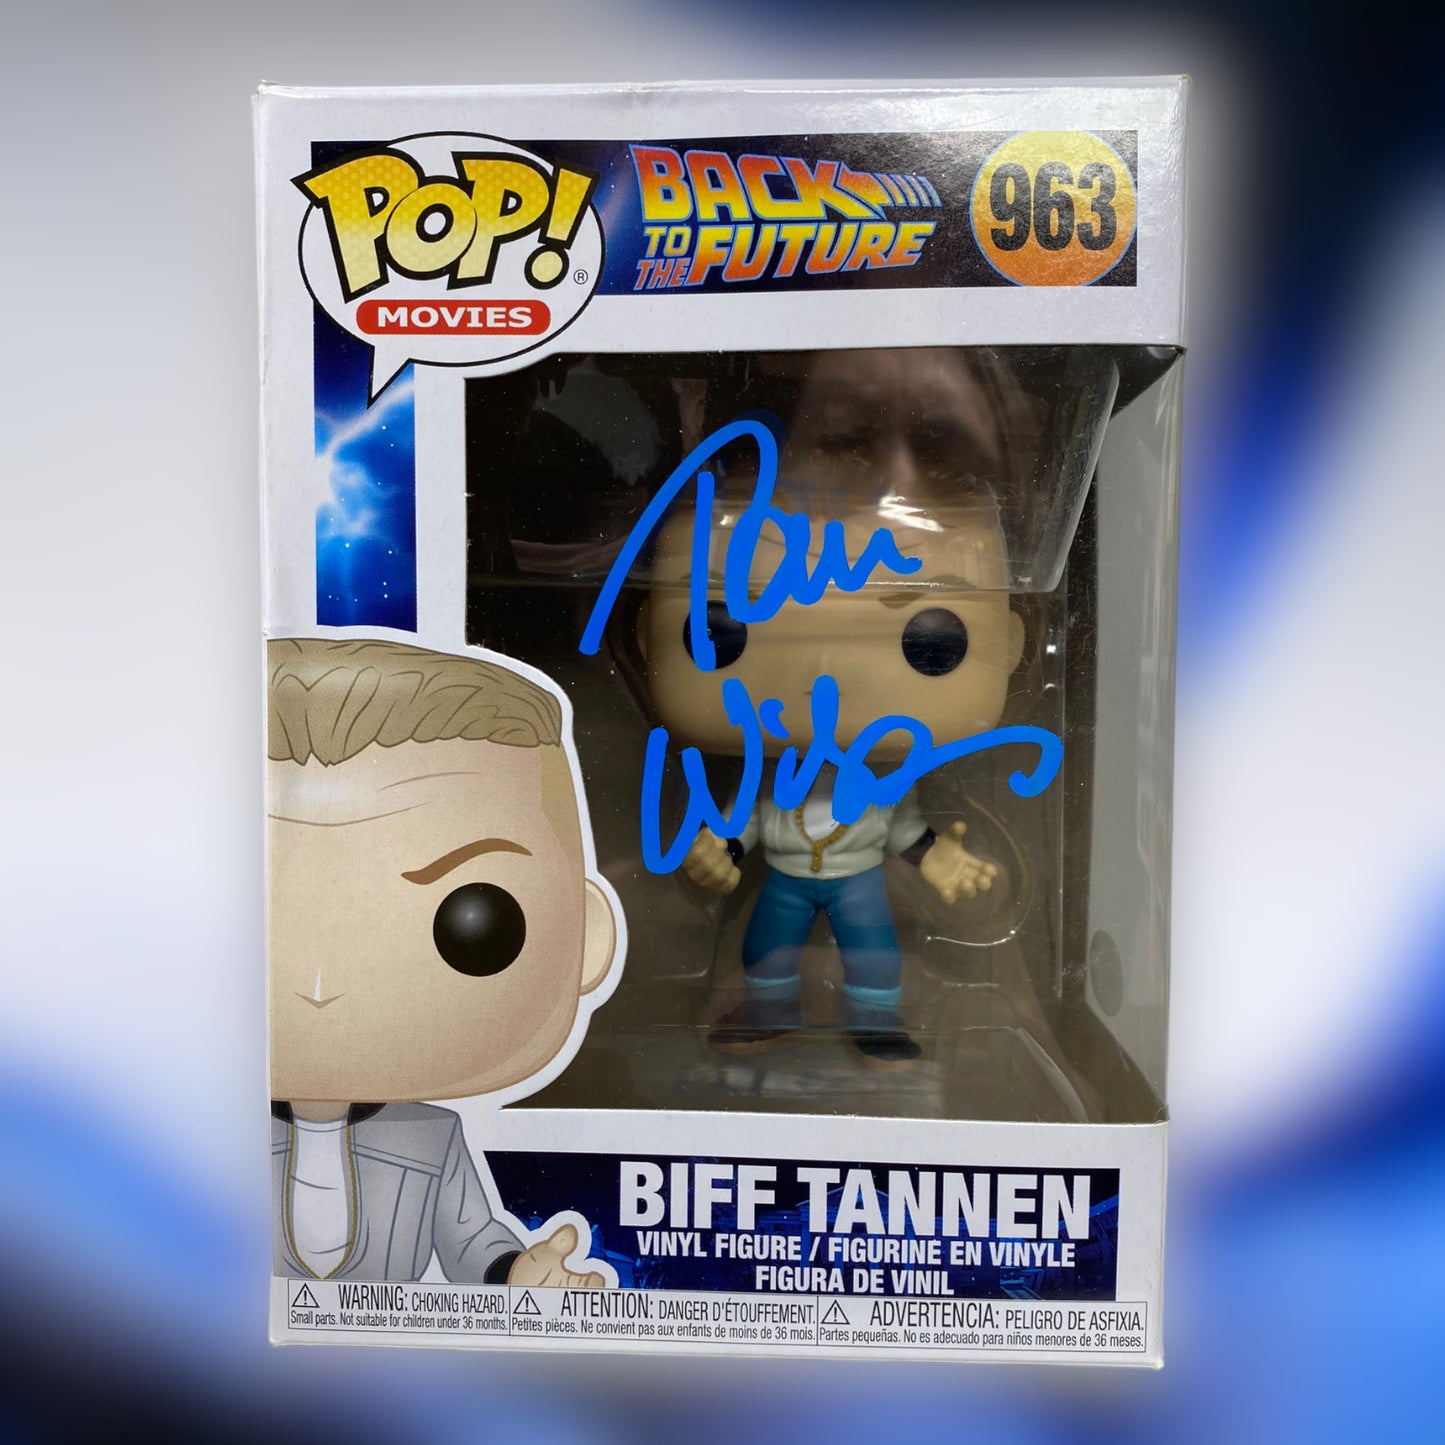 SOLD - 2020 Tom Wilson Autographed Biff Tannen 963